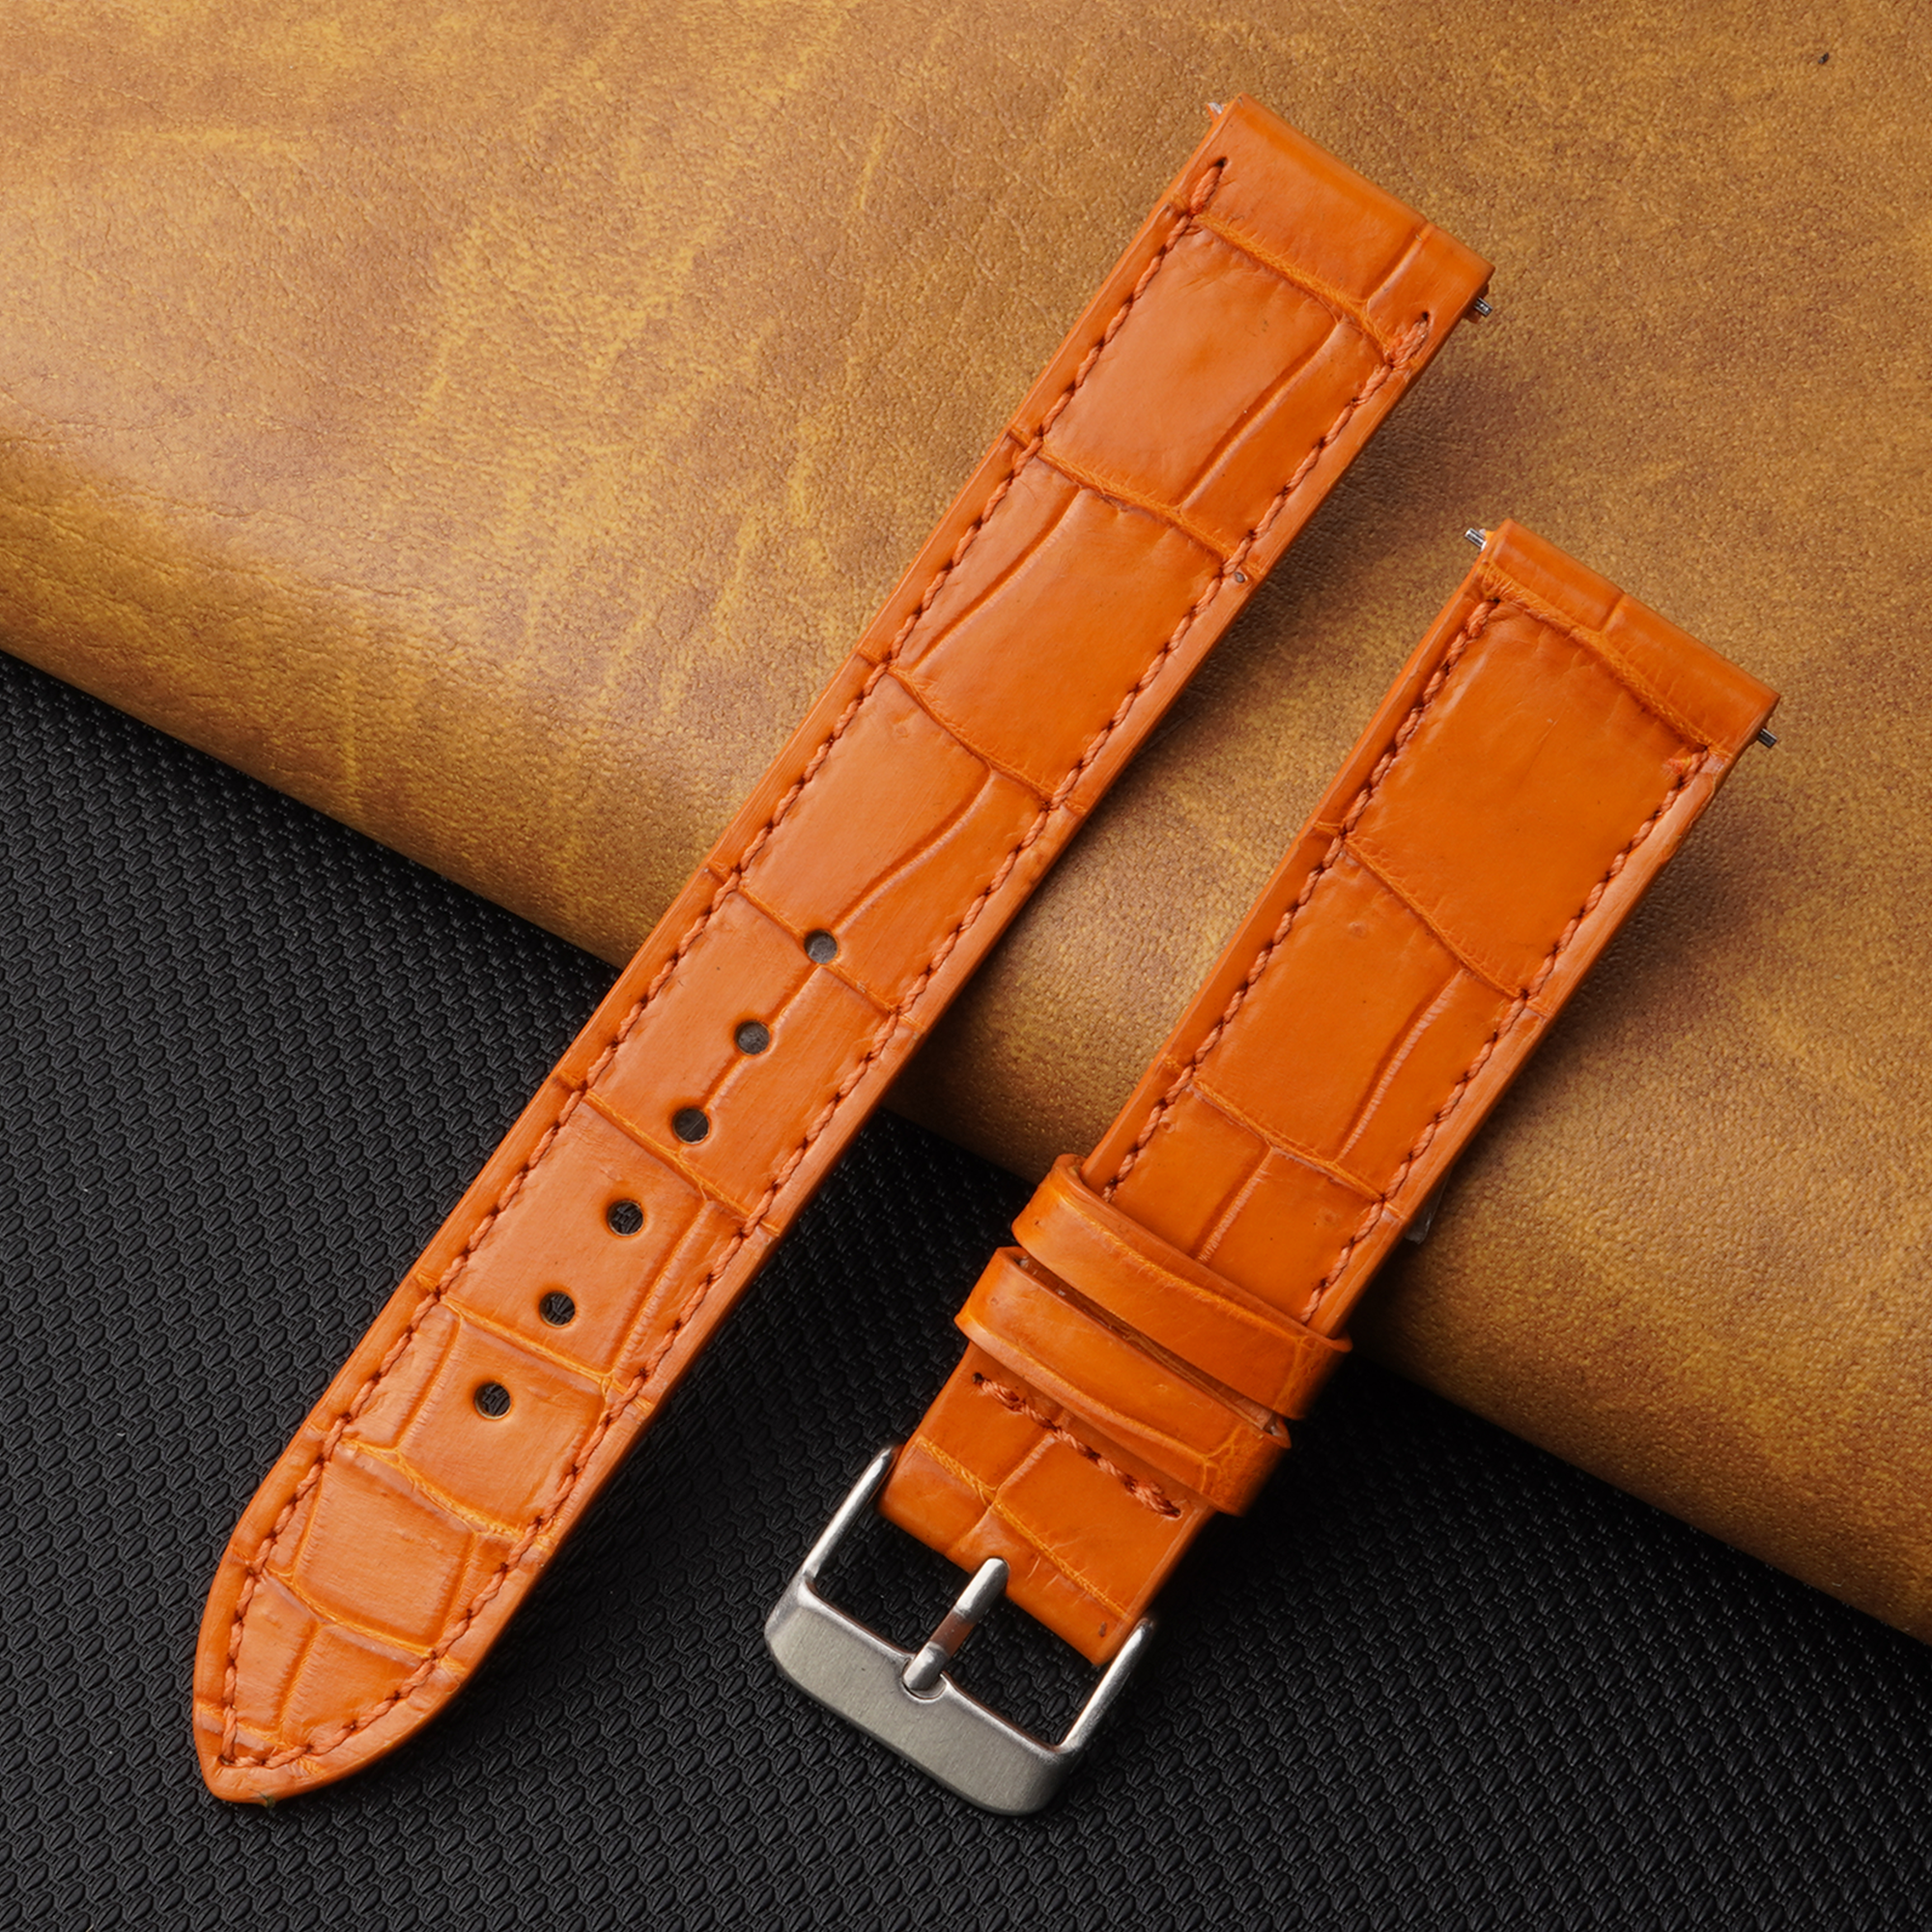 Flat Tan Alligator Leather Watch Band